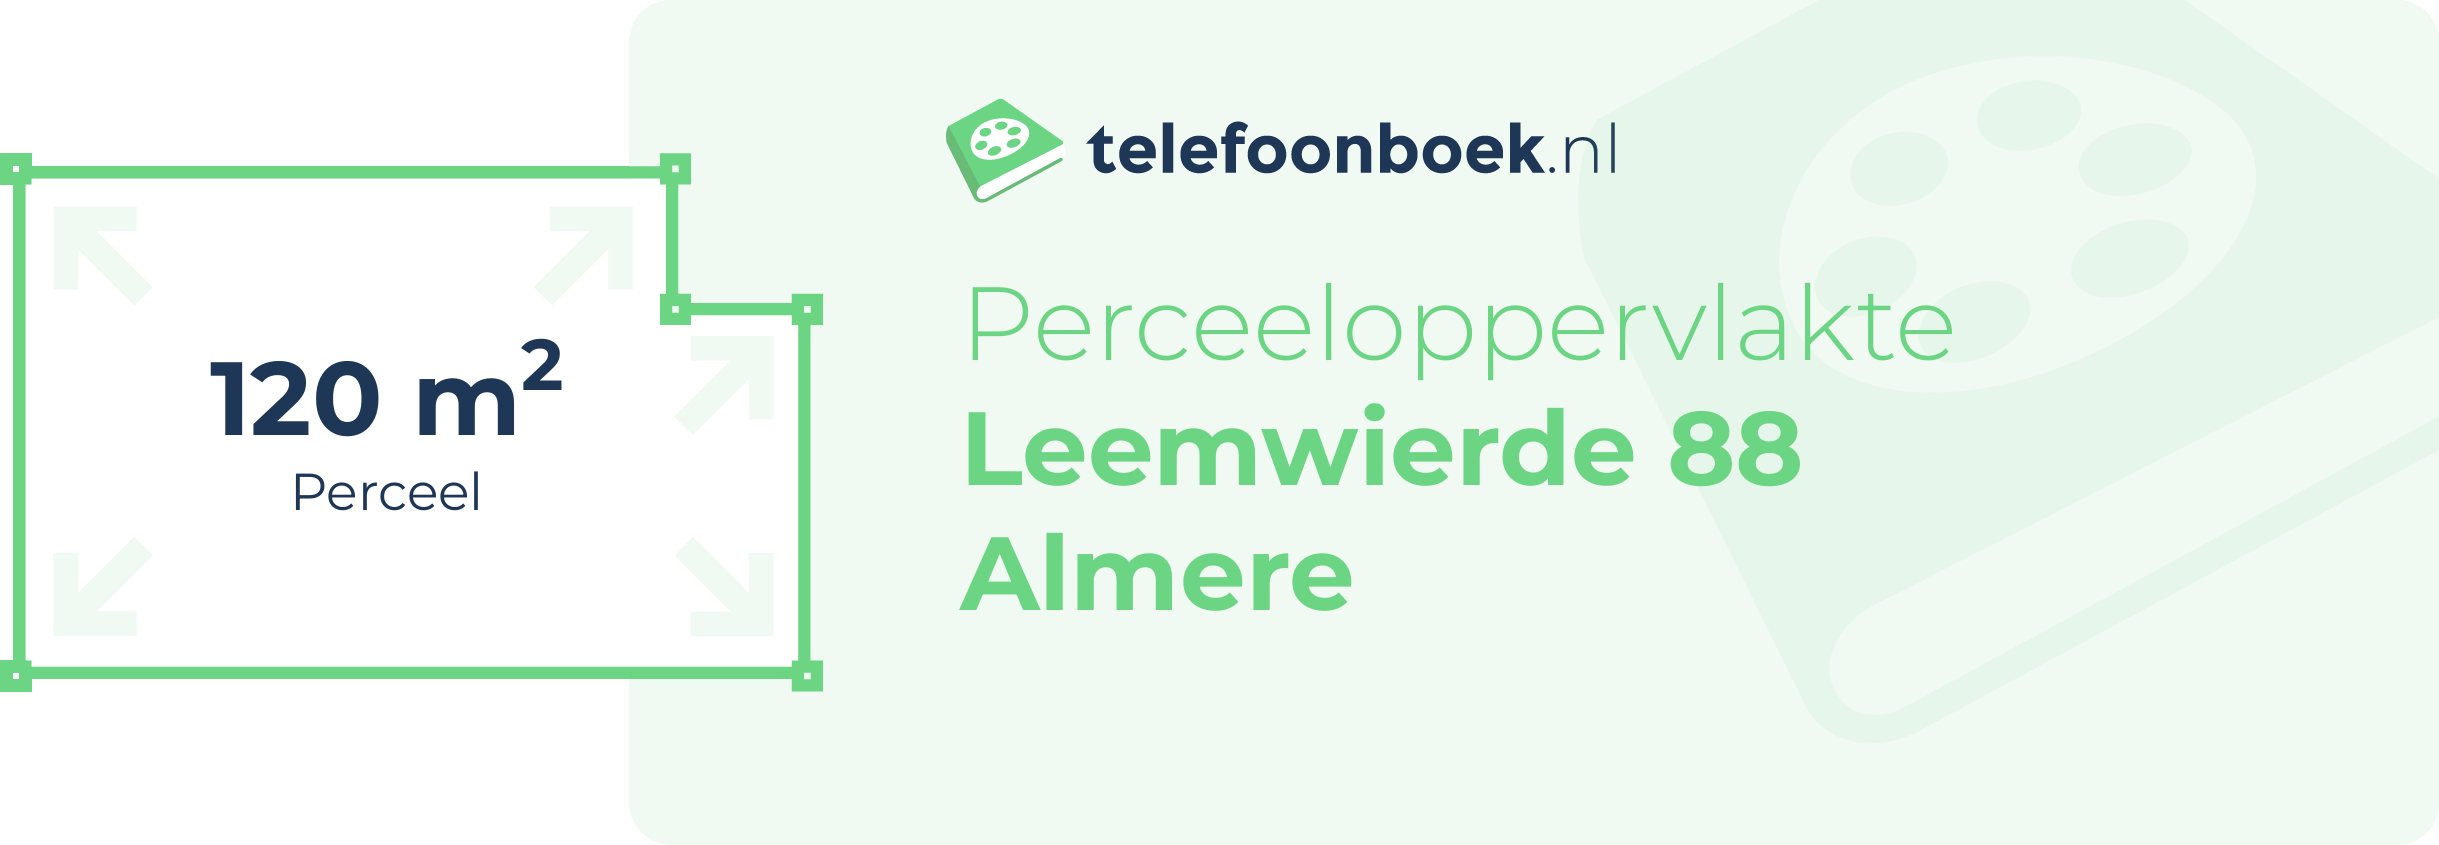 Perceeloppervlakte Leemwierde 88 Almere